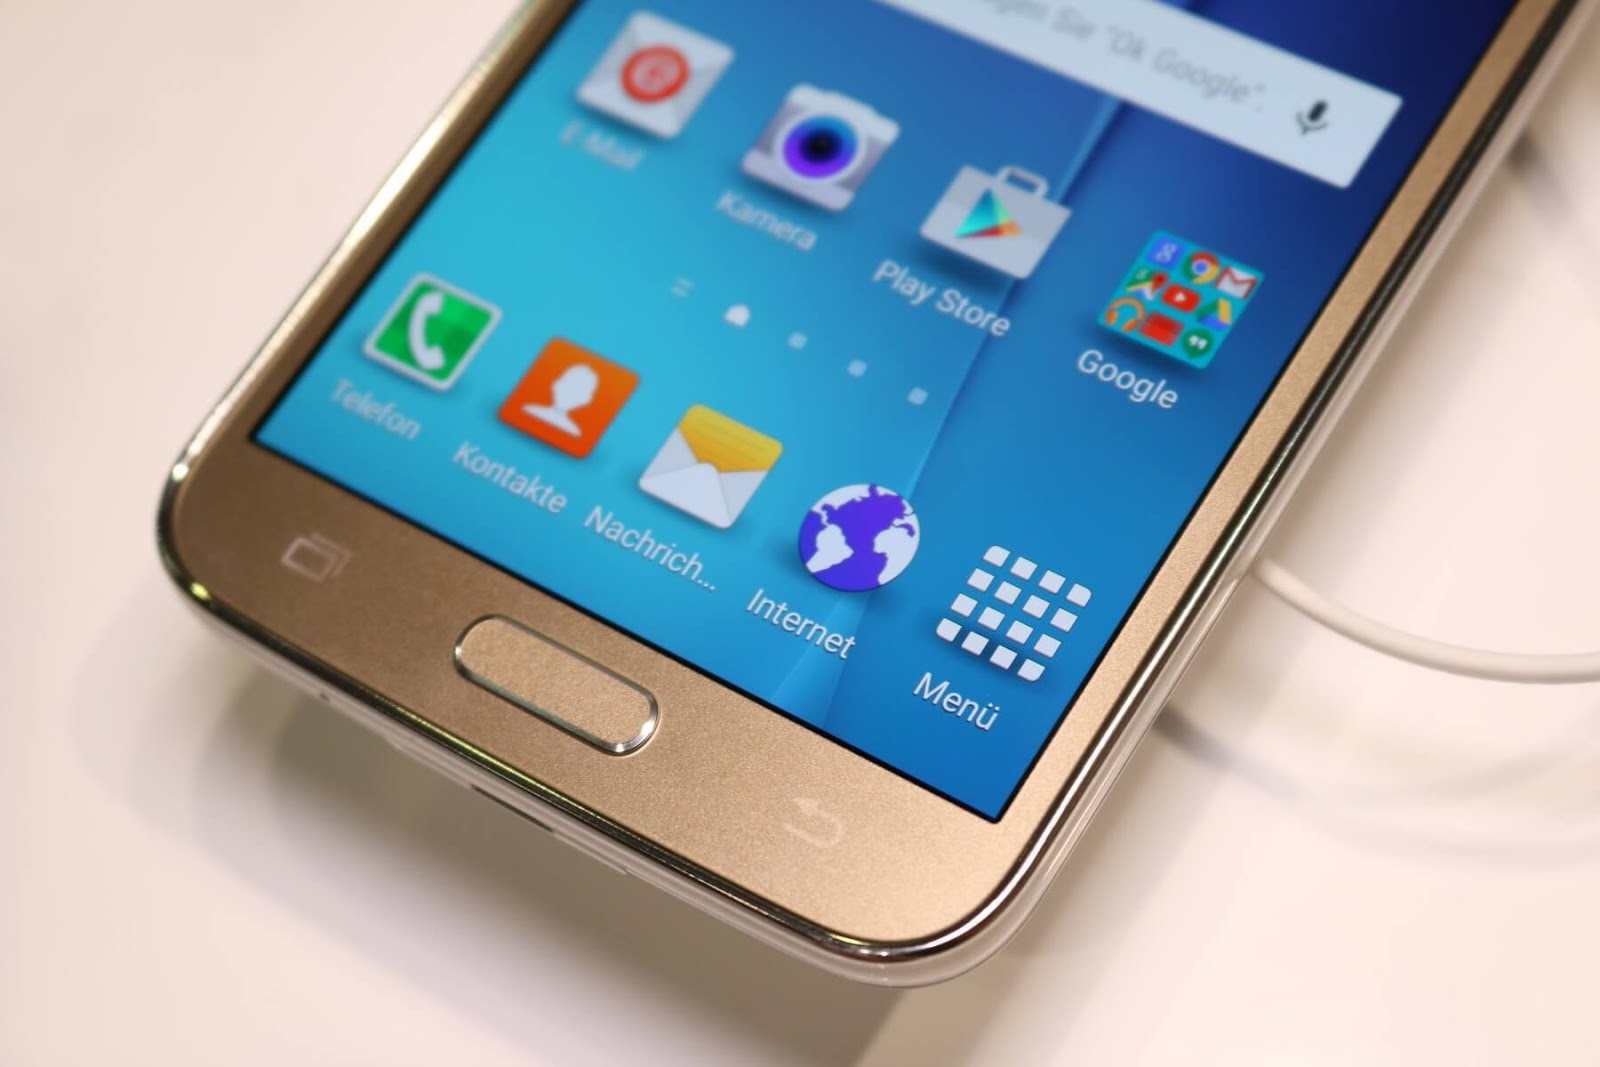 Samsung galaxy 14 андроид. Samsung s5 Neo. Самсунг на 5 андроиде. Андроид 5.1.1 самсунг. Андроид 1.5 самсунг.